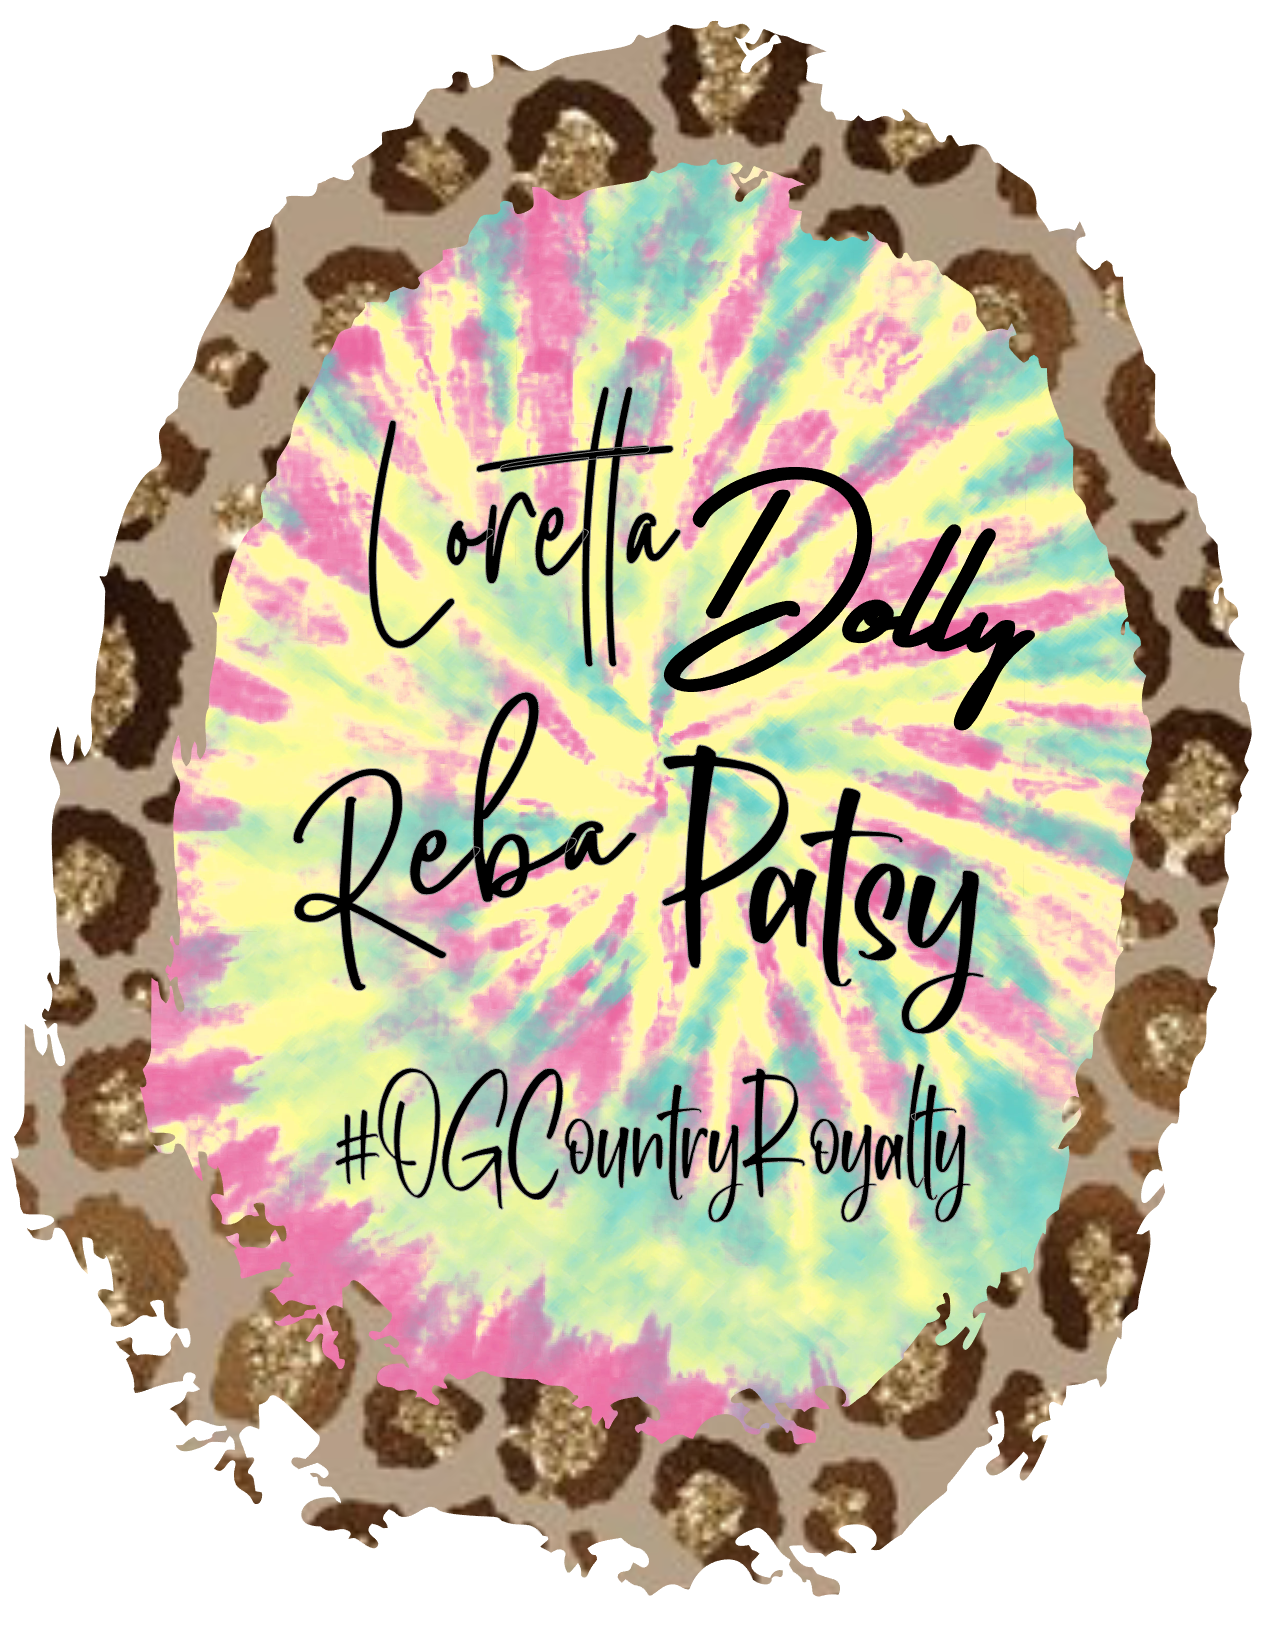 #138 Loretta Dolly Reba Patsy #OG Country Royalty